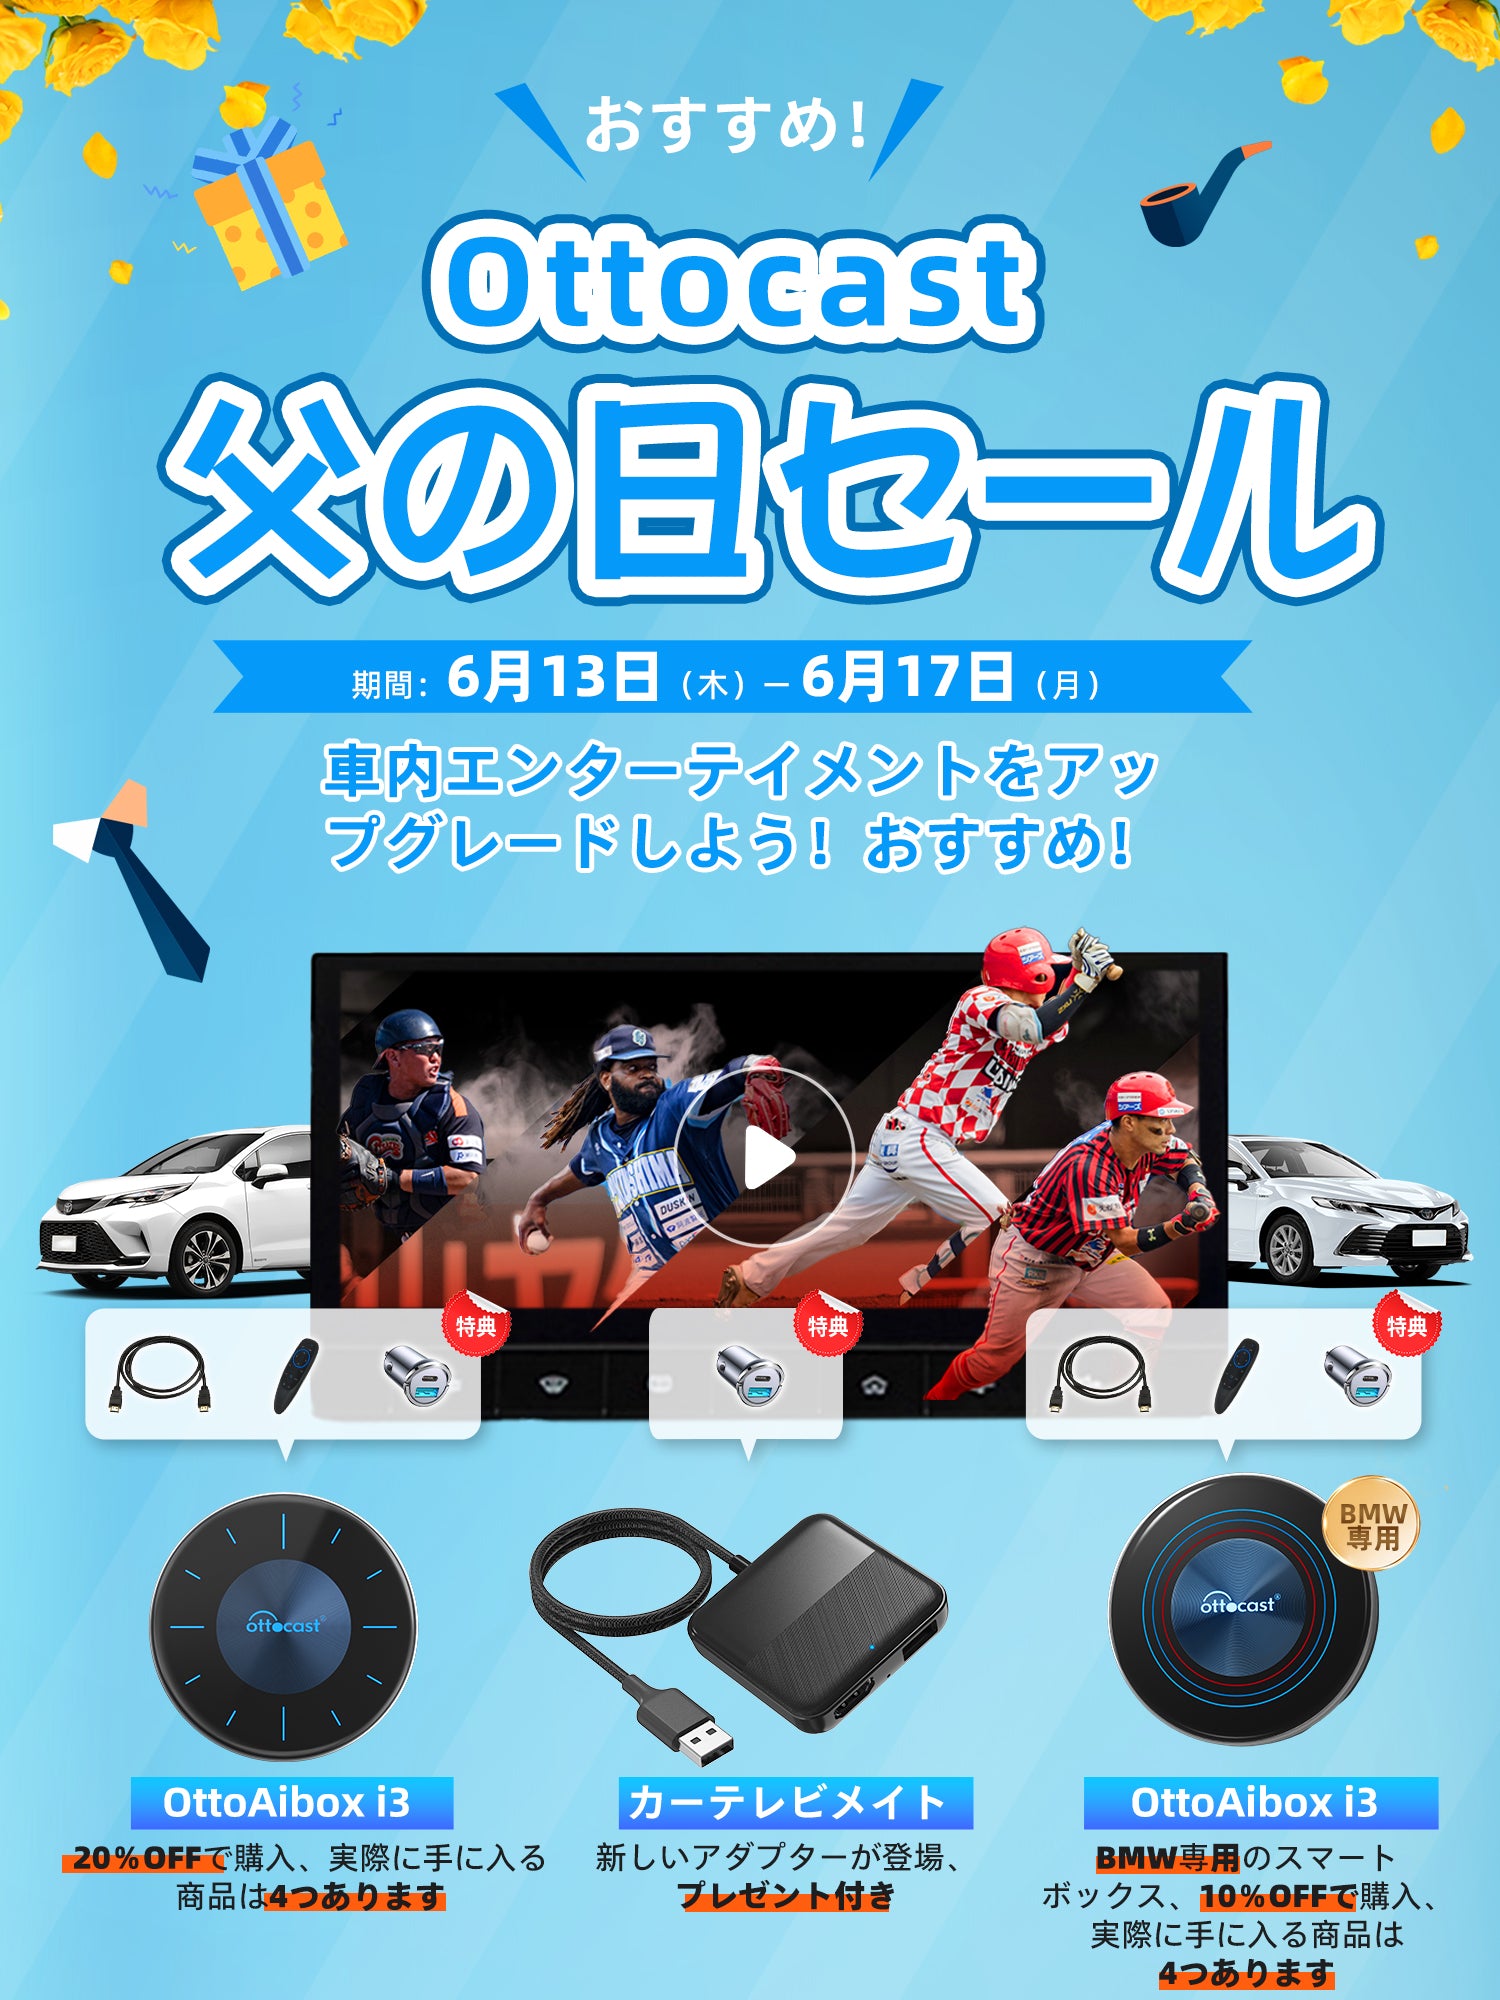 Ottocast Japanは、カーテック業界のグローバルリーダーである